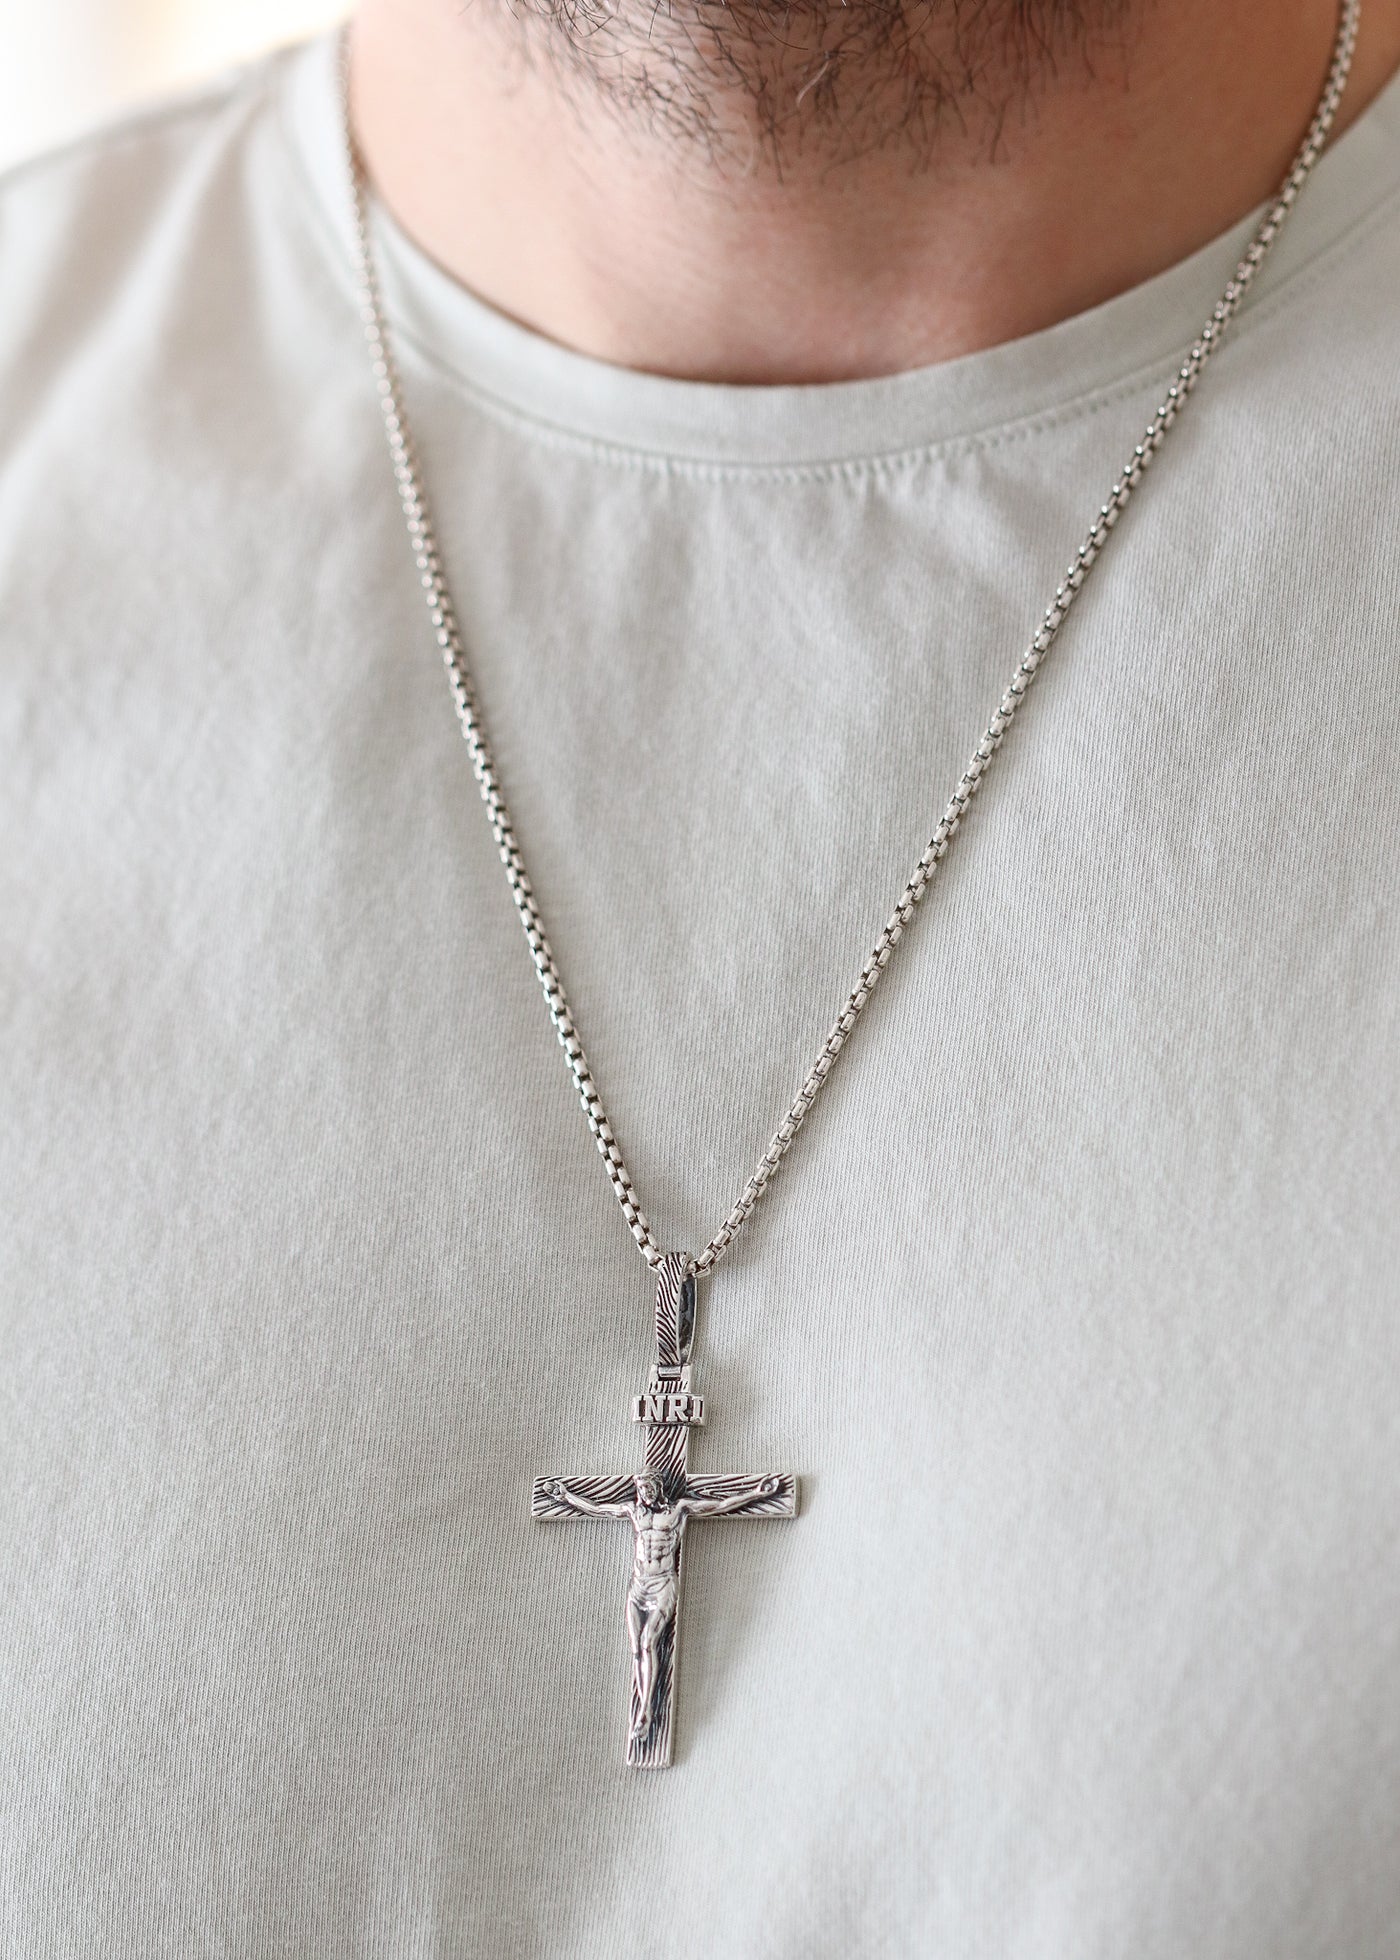 Catholic Silver Cross